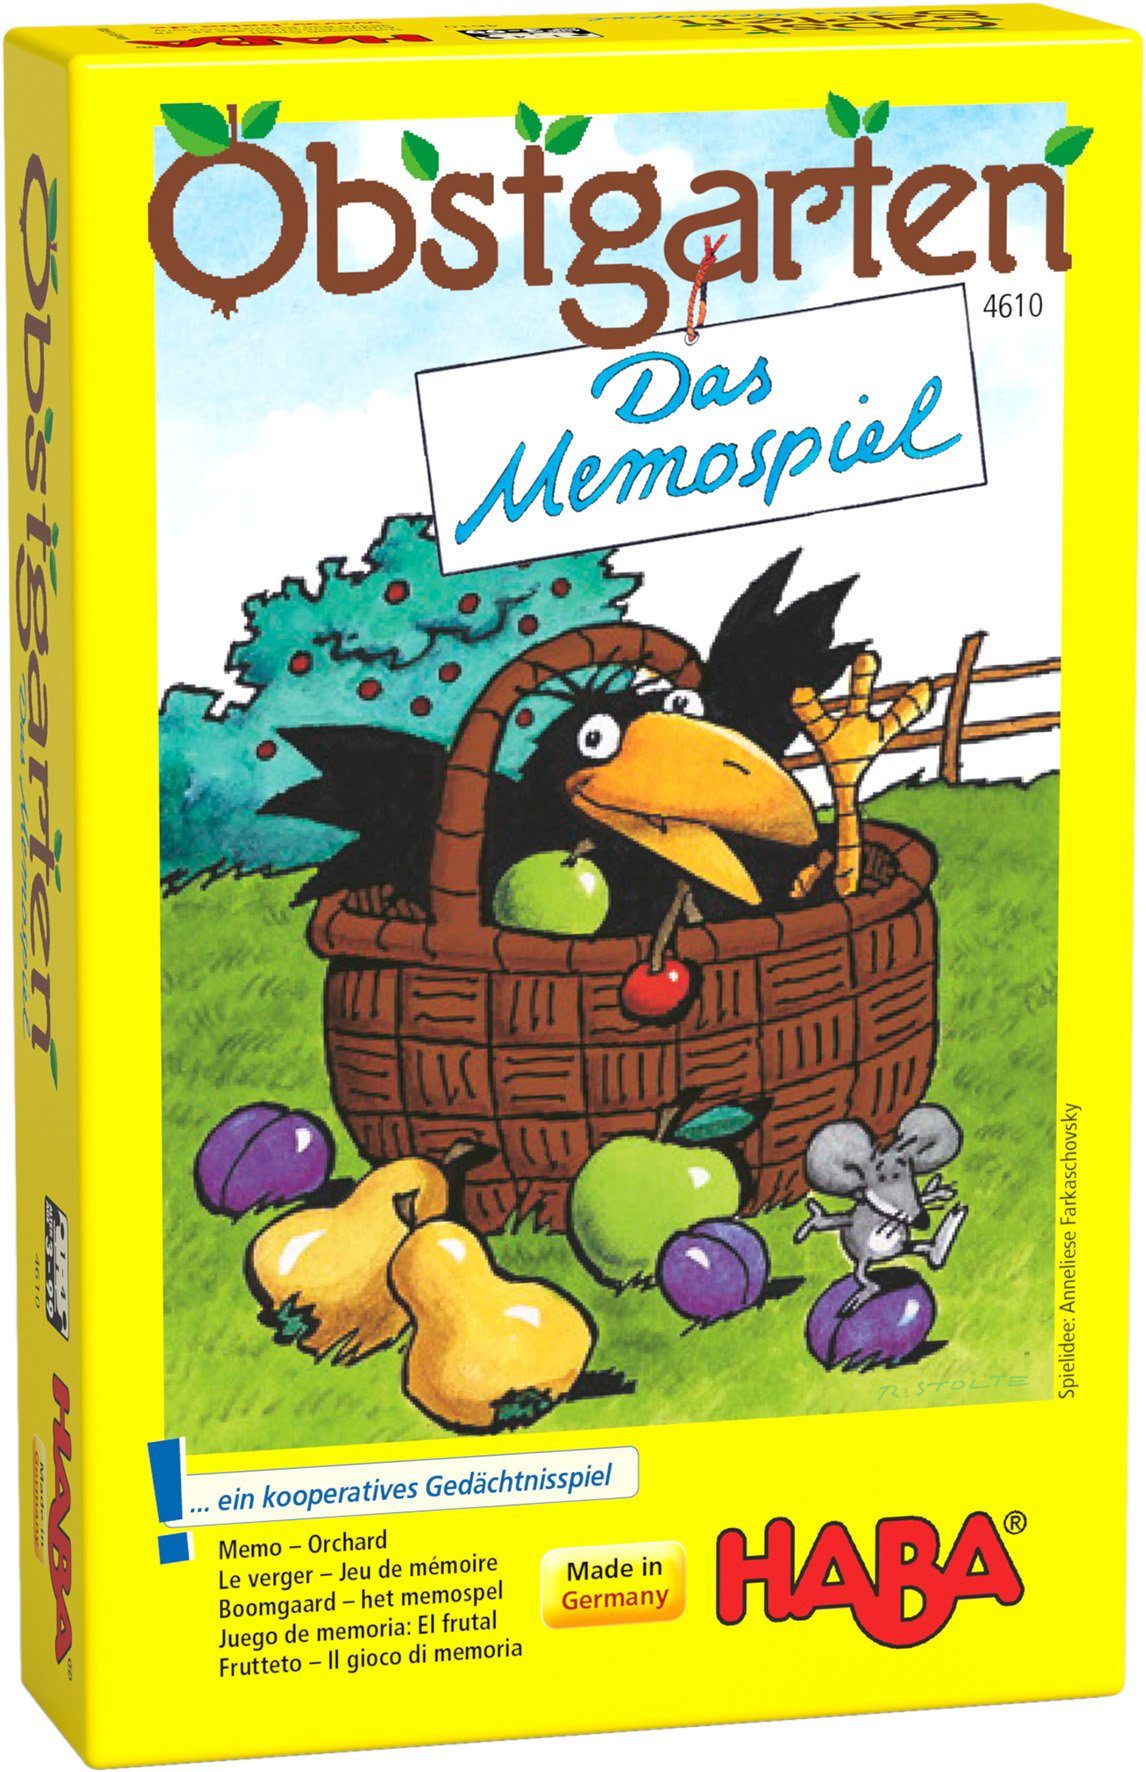 Haba Spiel, Memospiel Obstgarten, Made in Germany